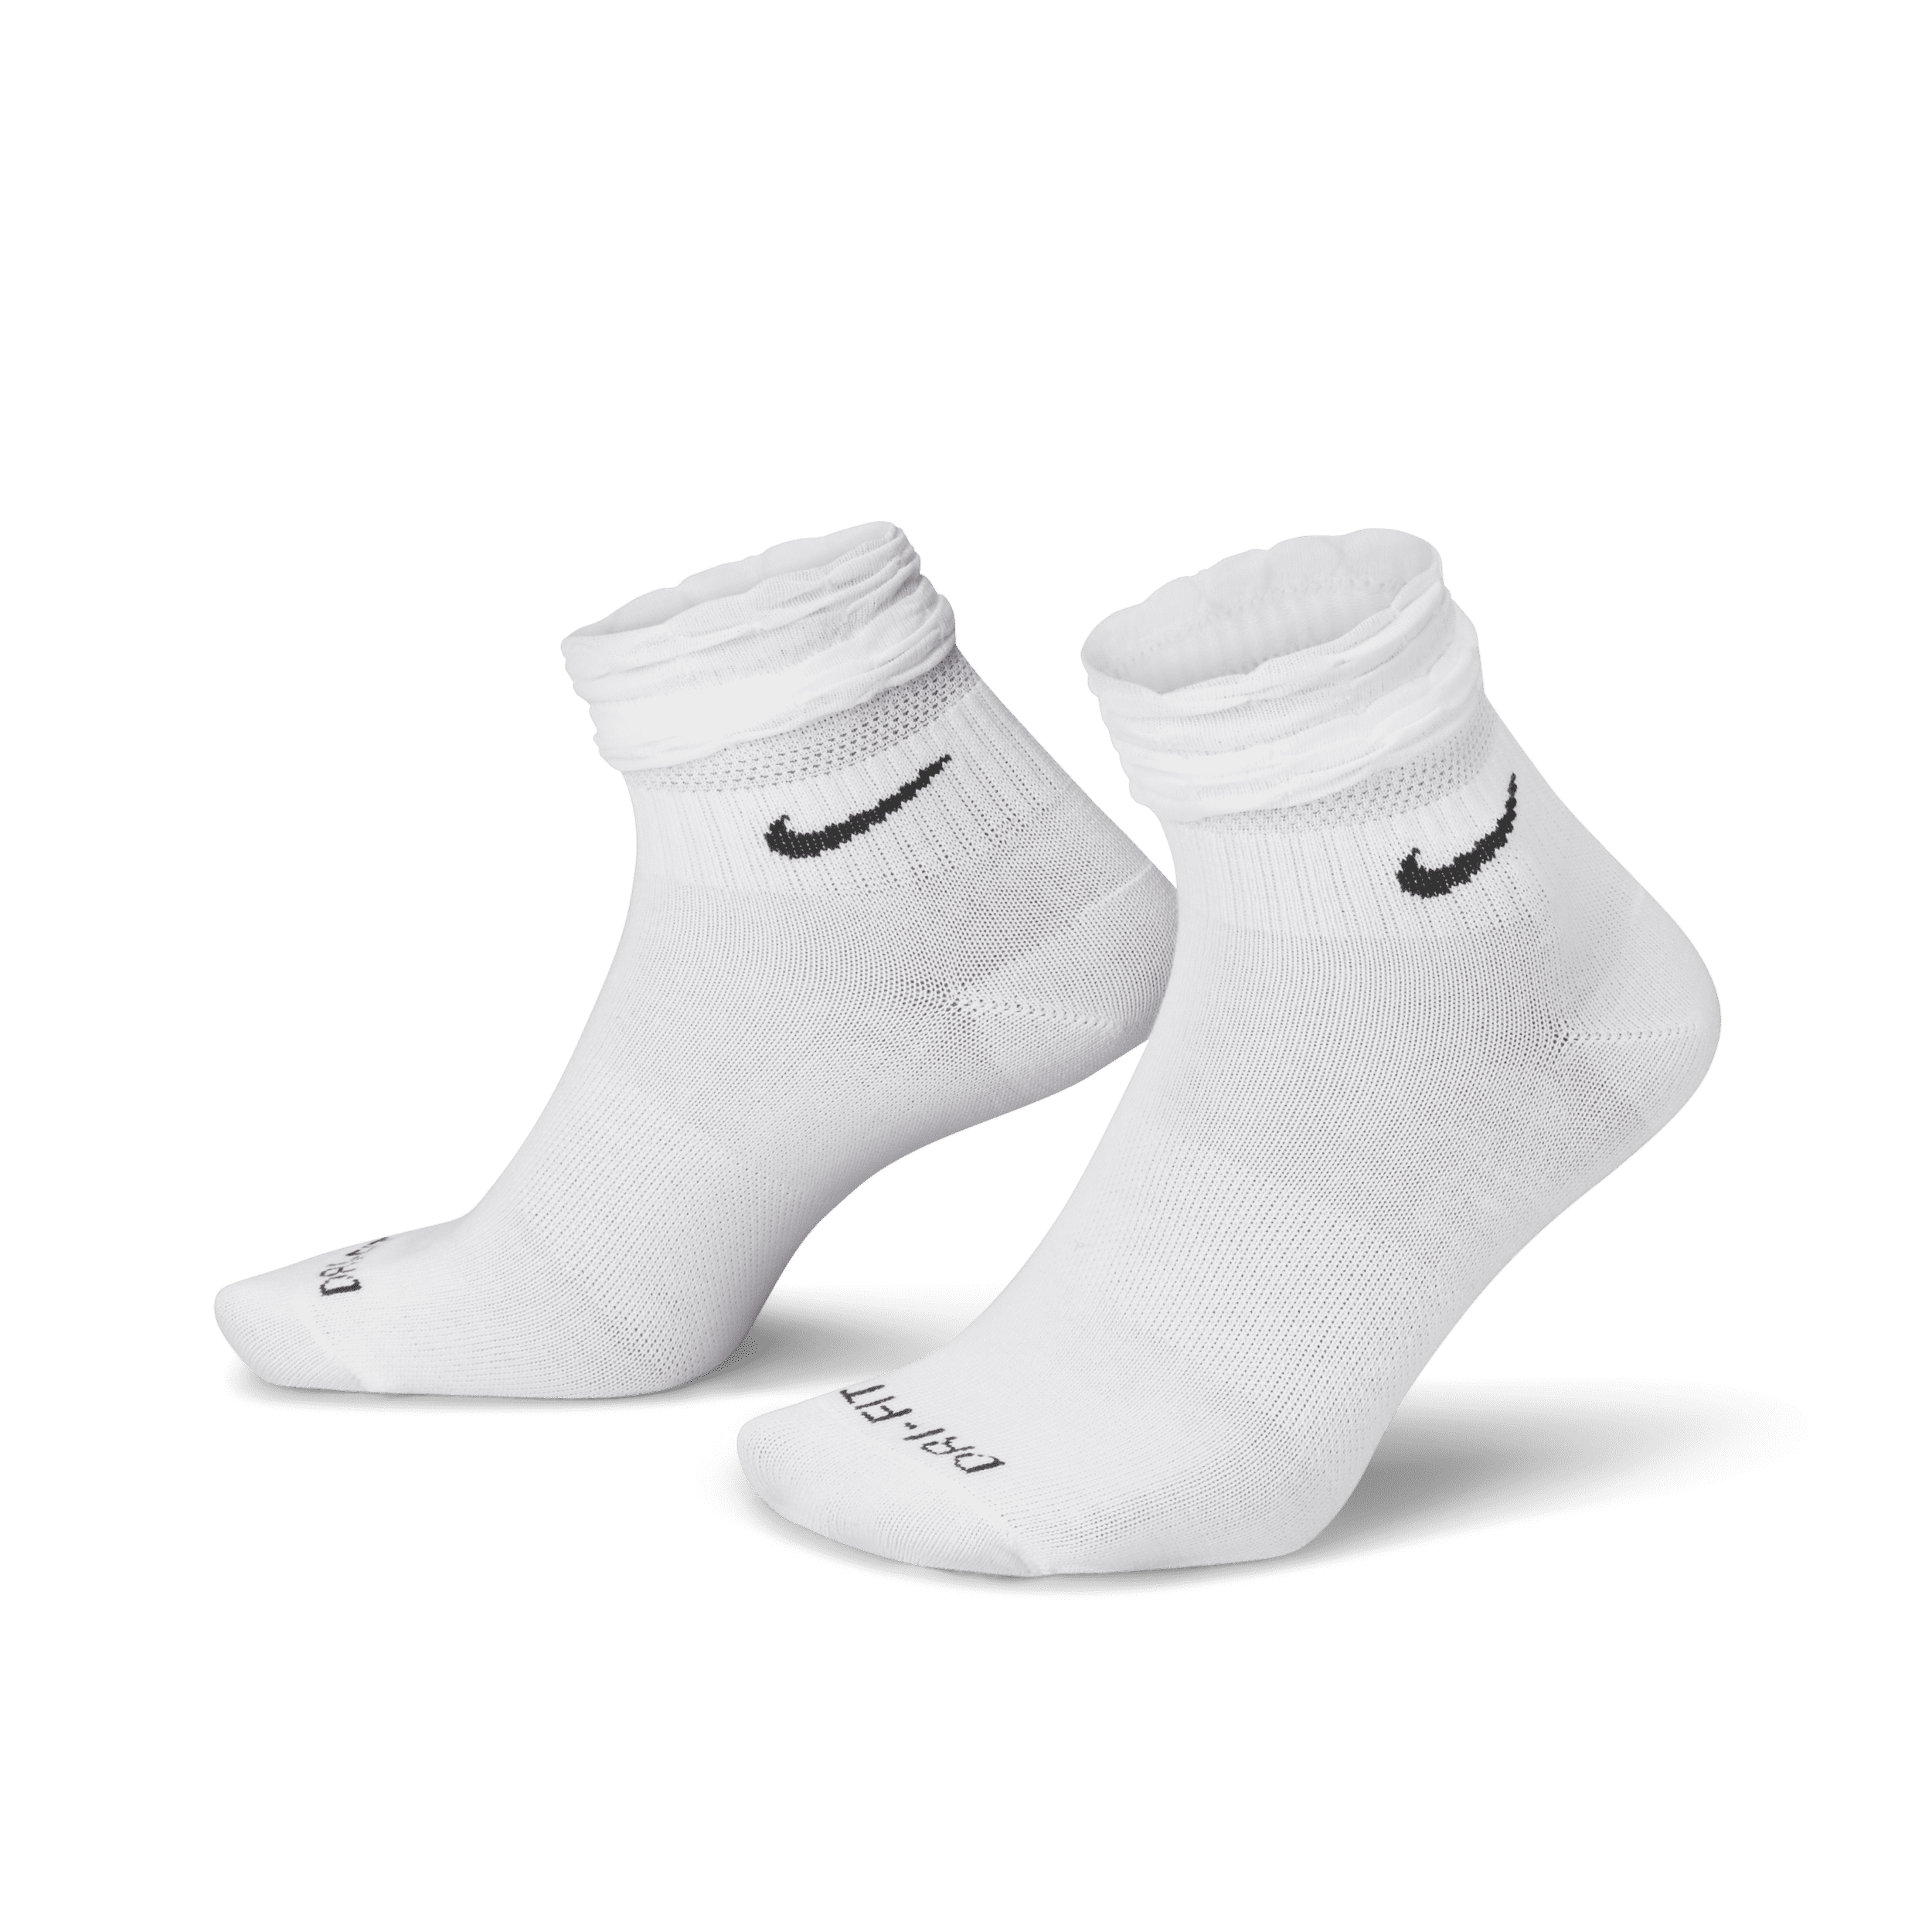 Calze da training alla caviglia Nike Everyday - Bianco